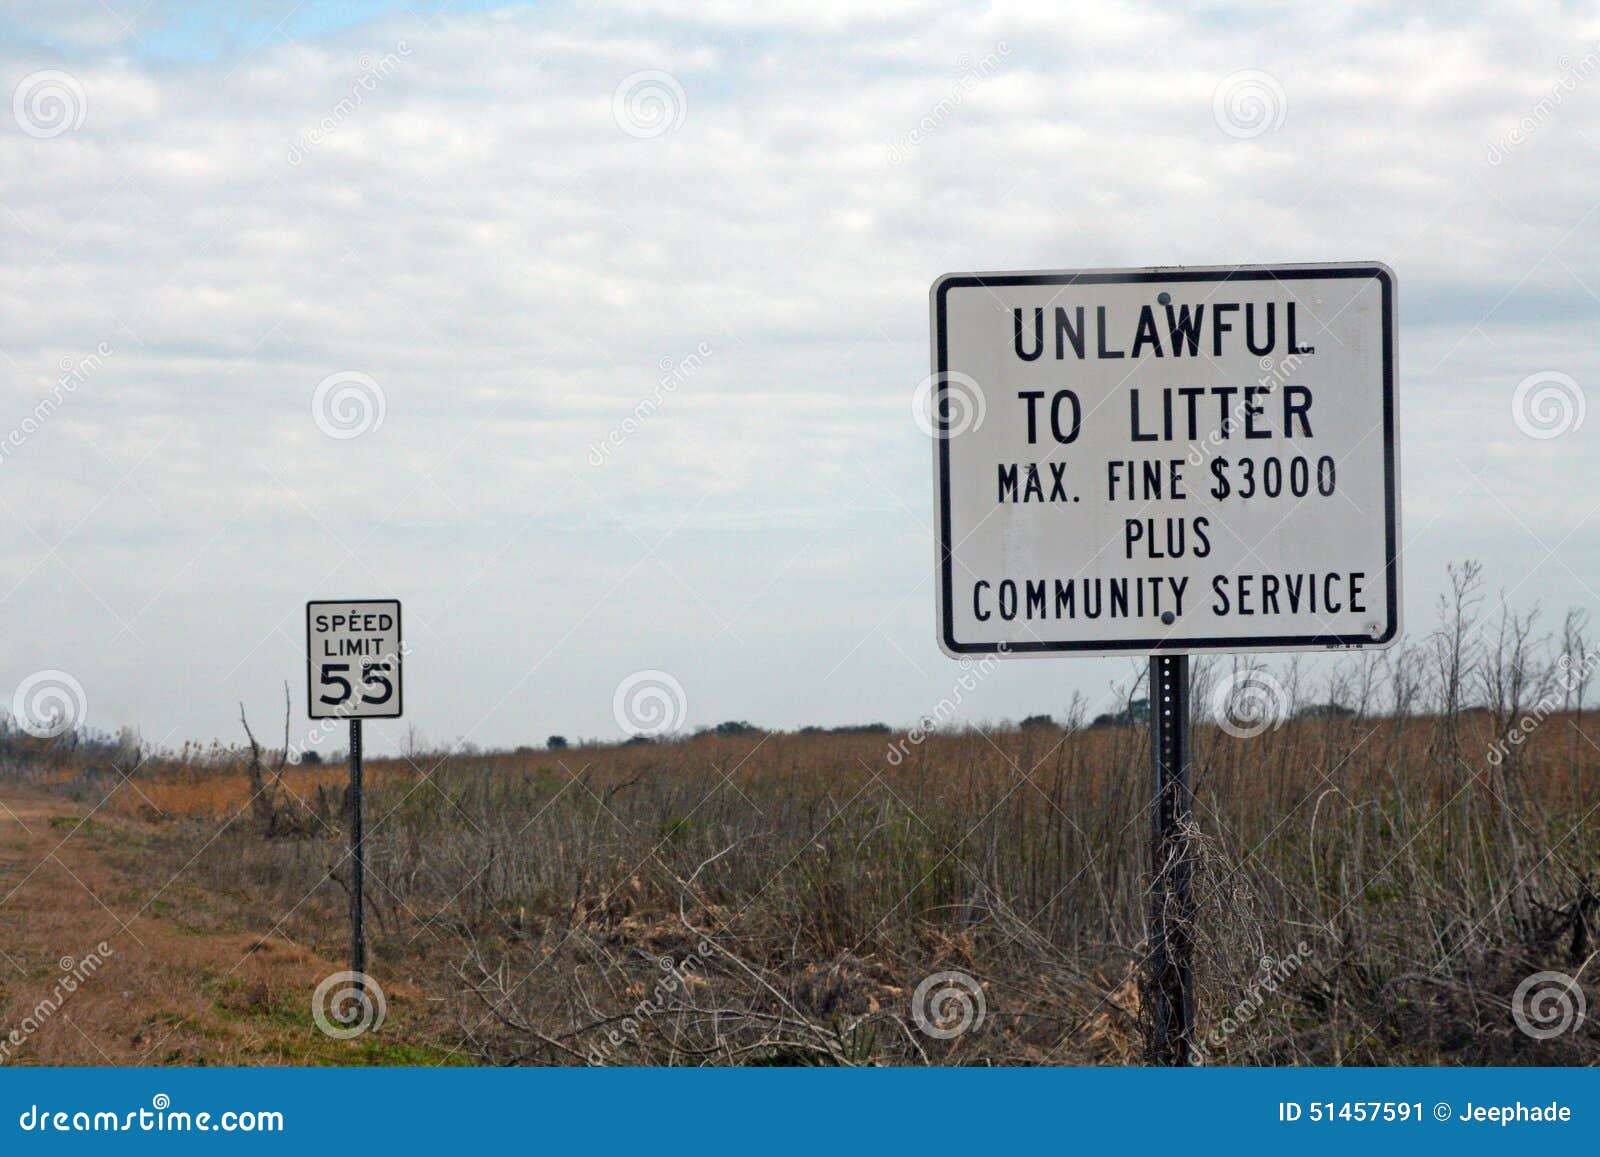 unlawful to litter